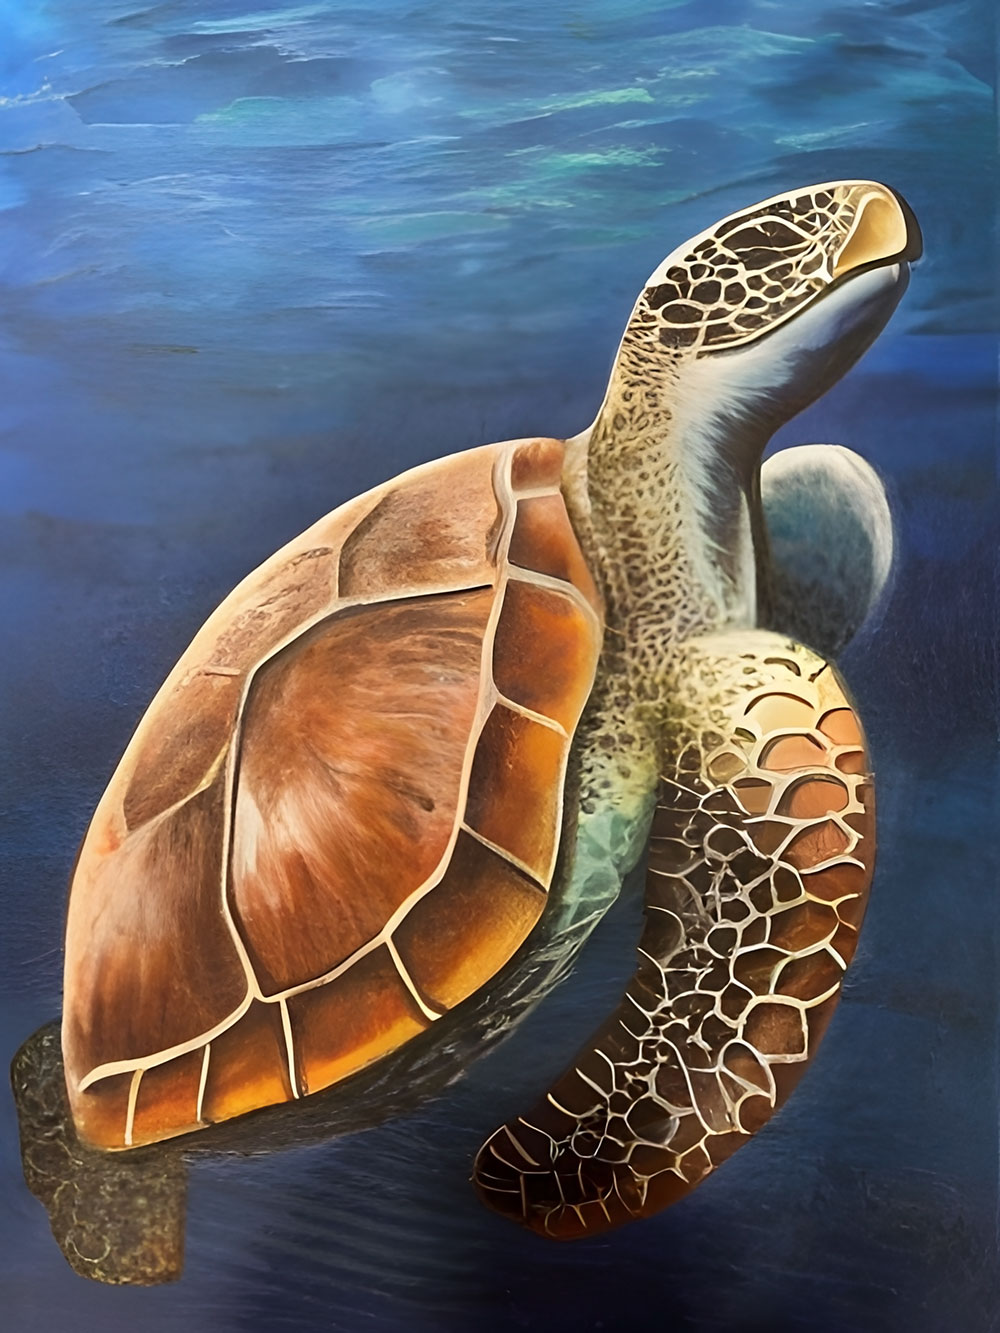 Turtle Painting Career Growth